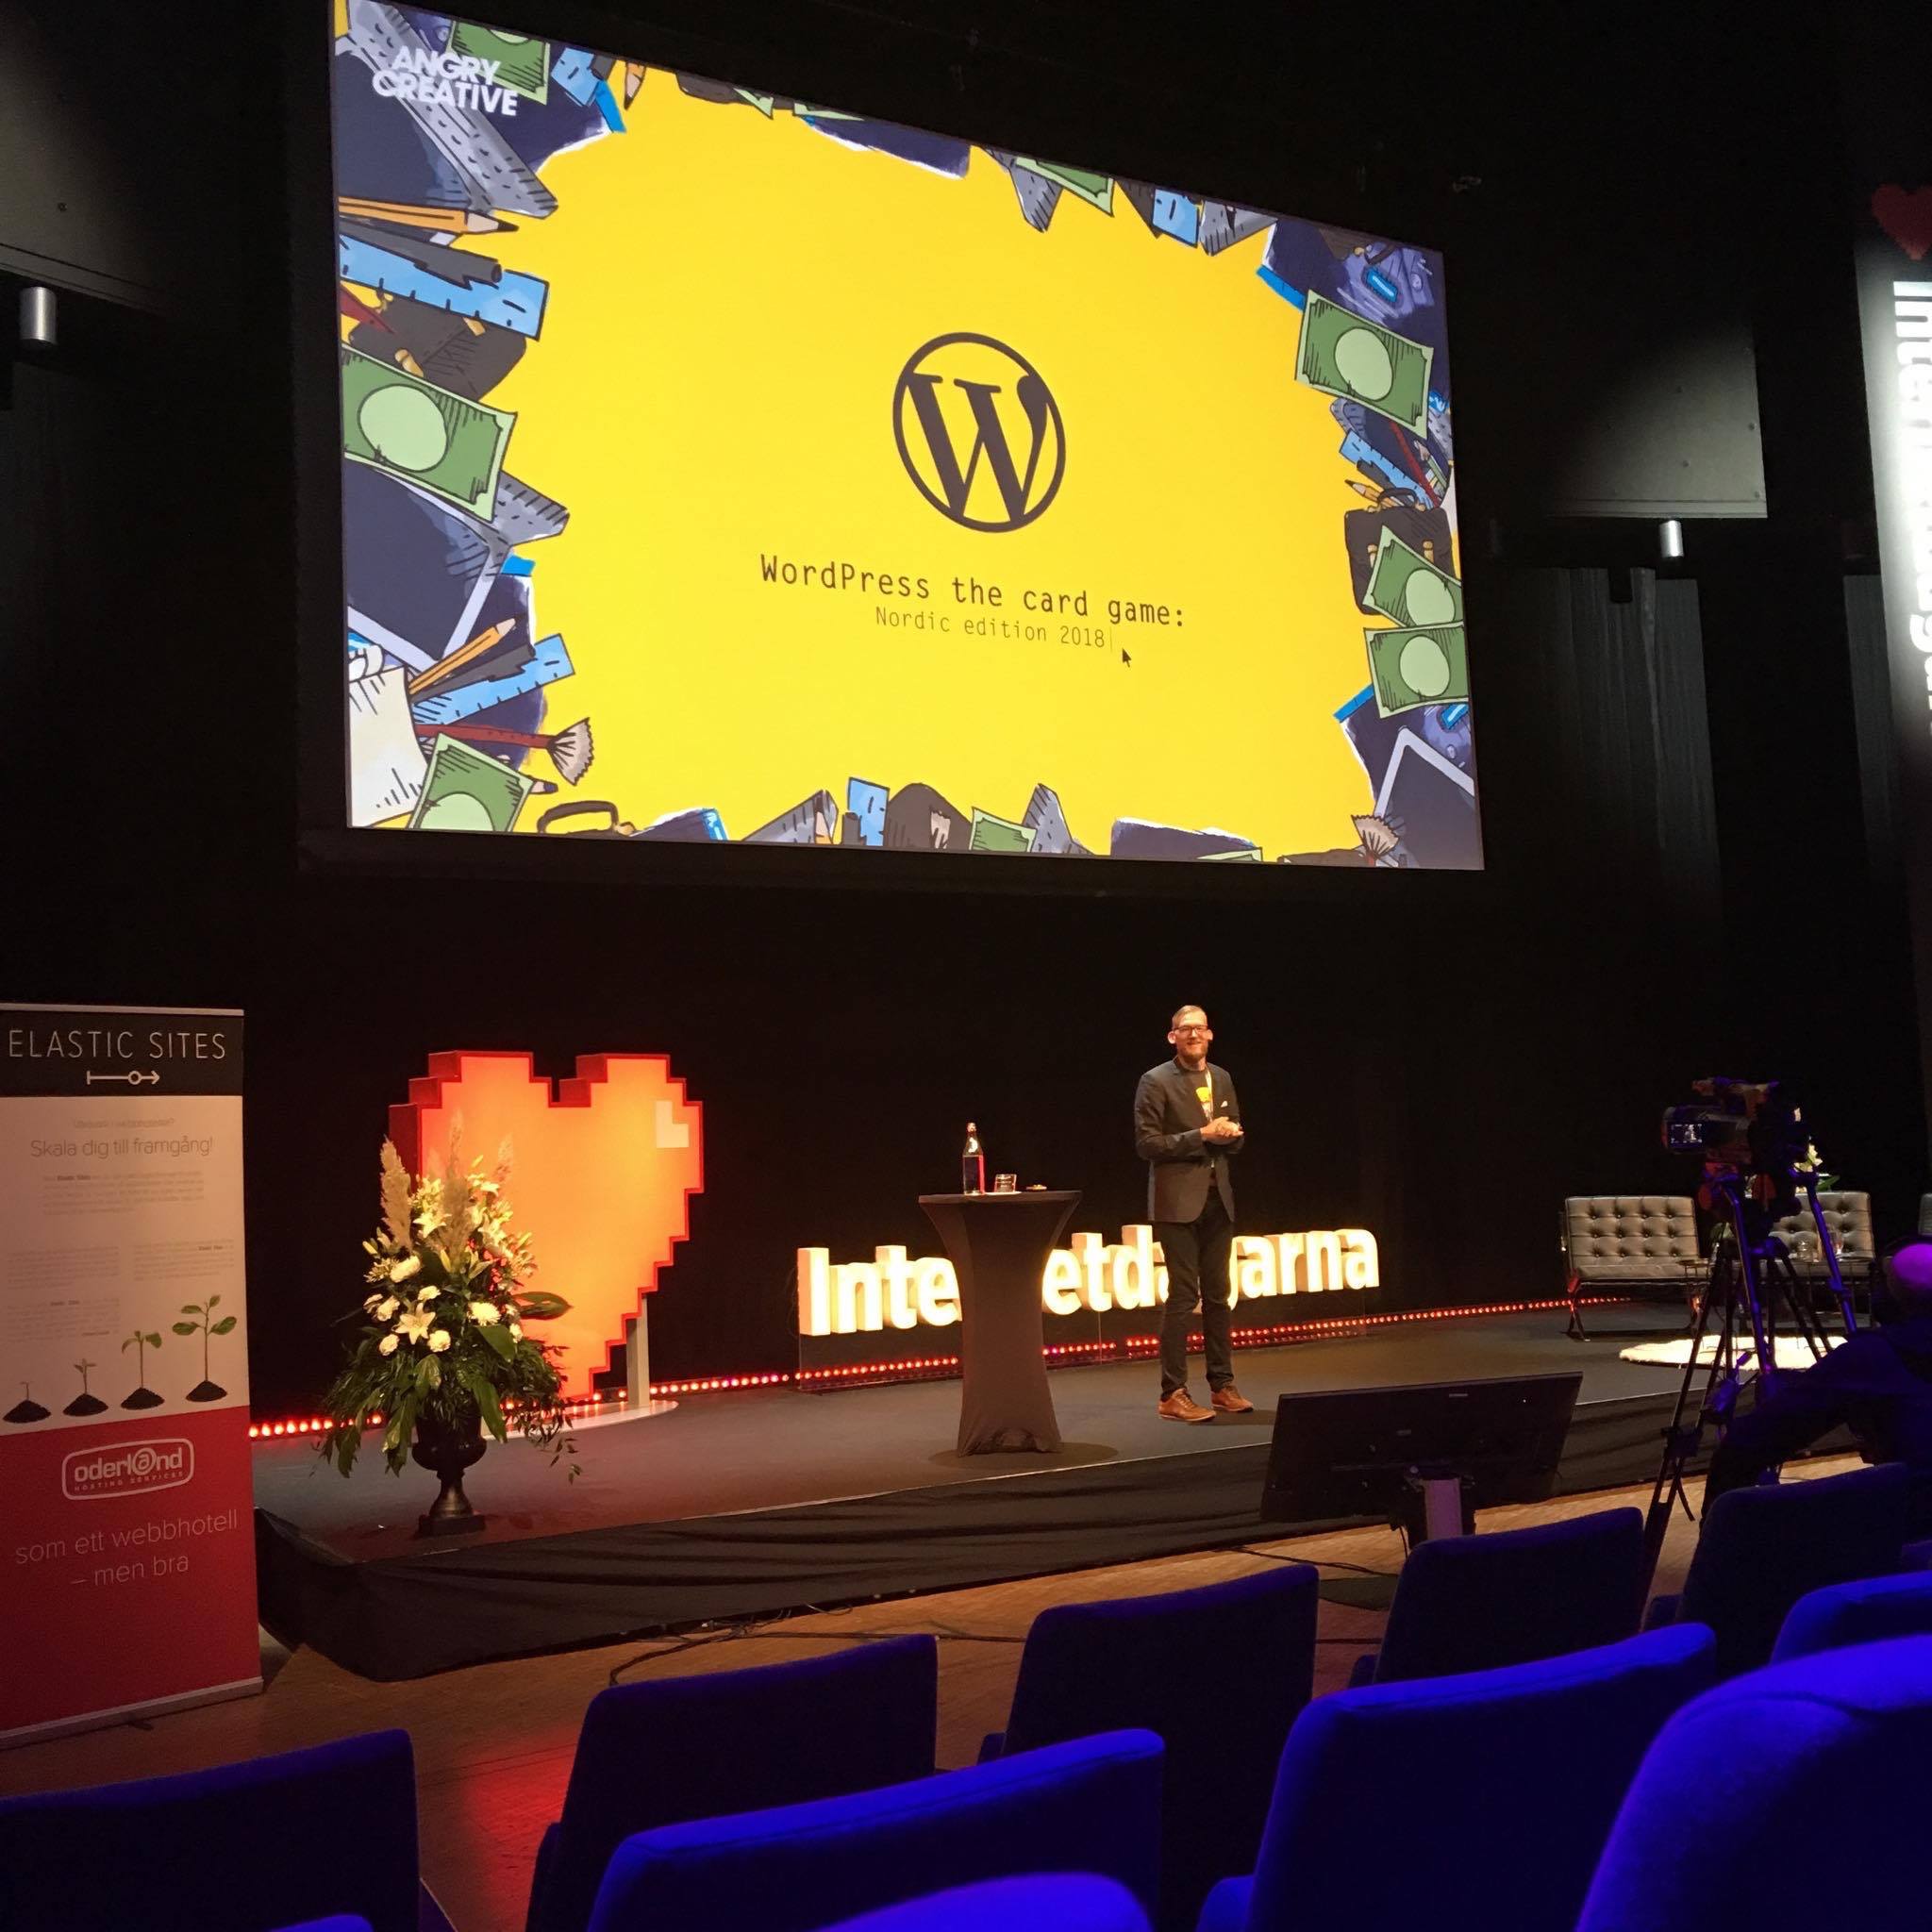 WordCamp Stockholm 2017 & WordPress the Card Game